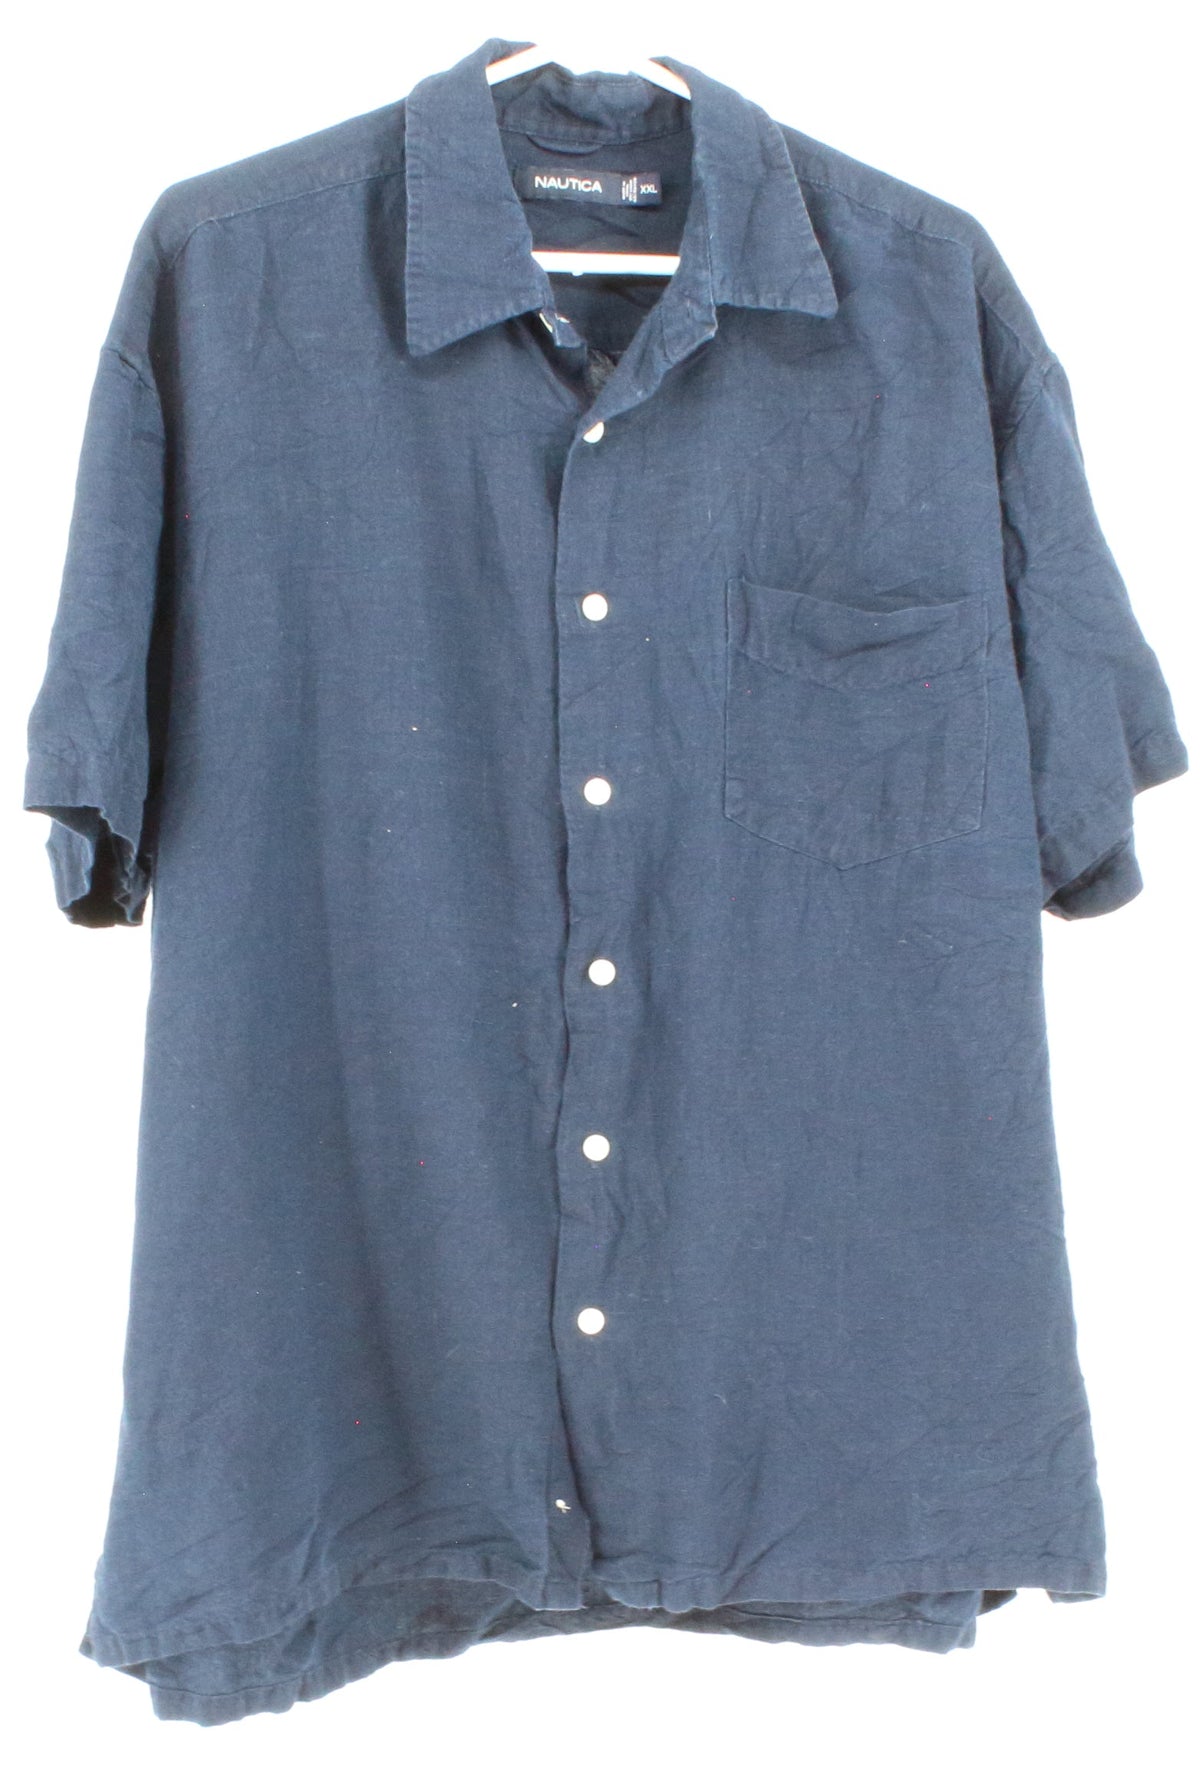 Nautica Navy Blue Short Sleeve Shirt